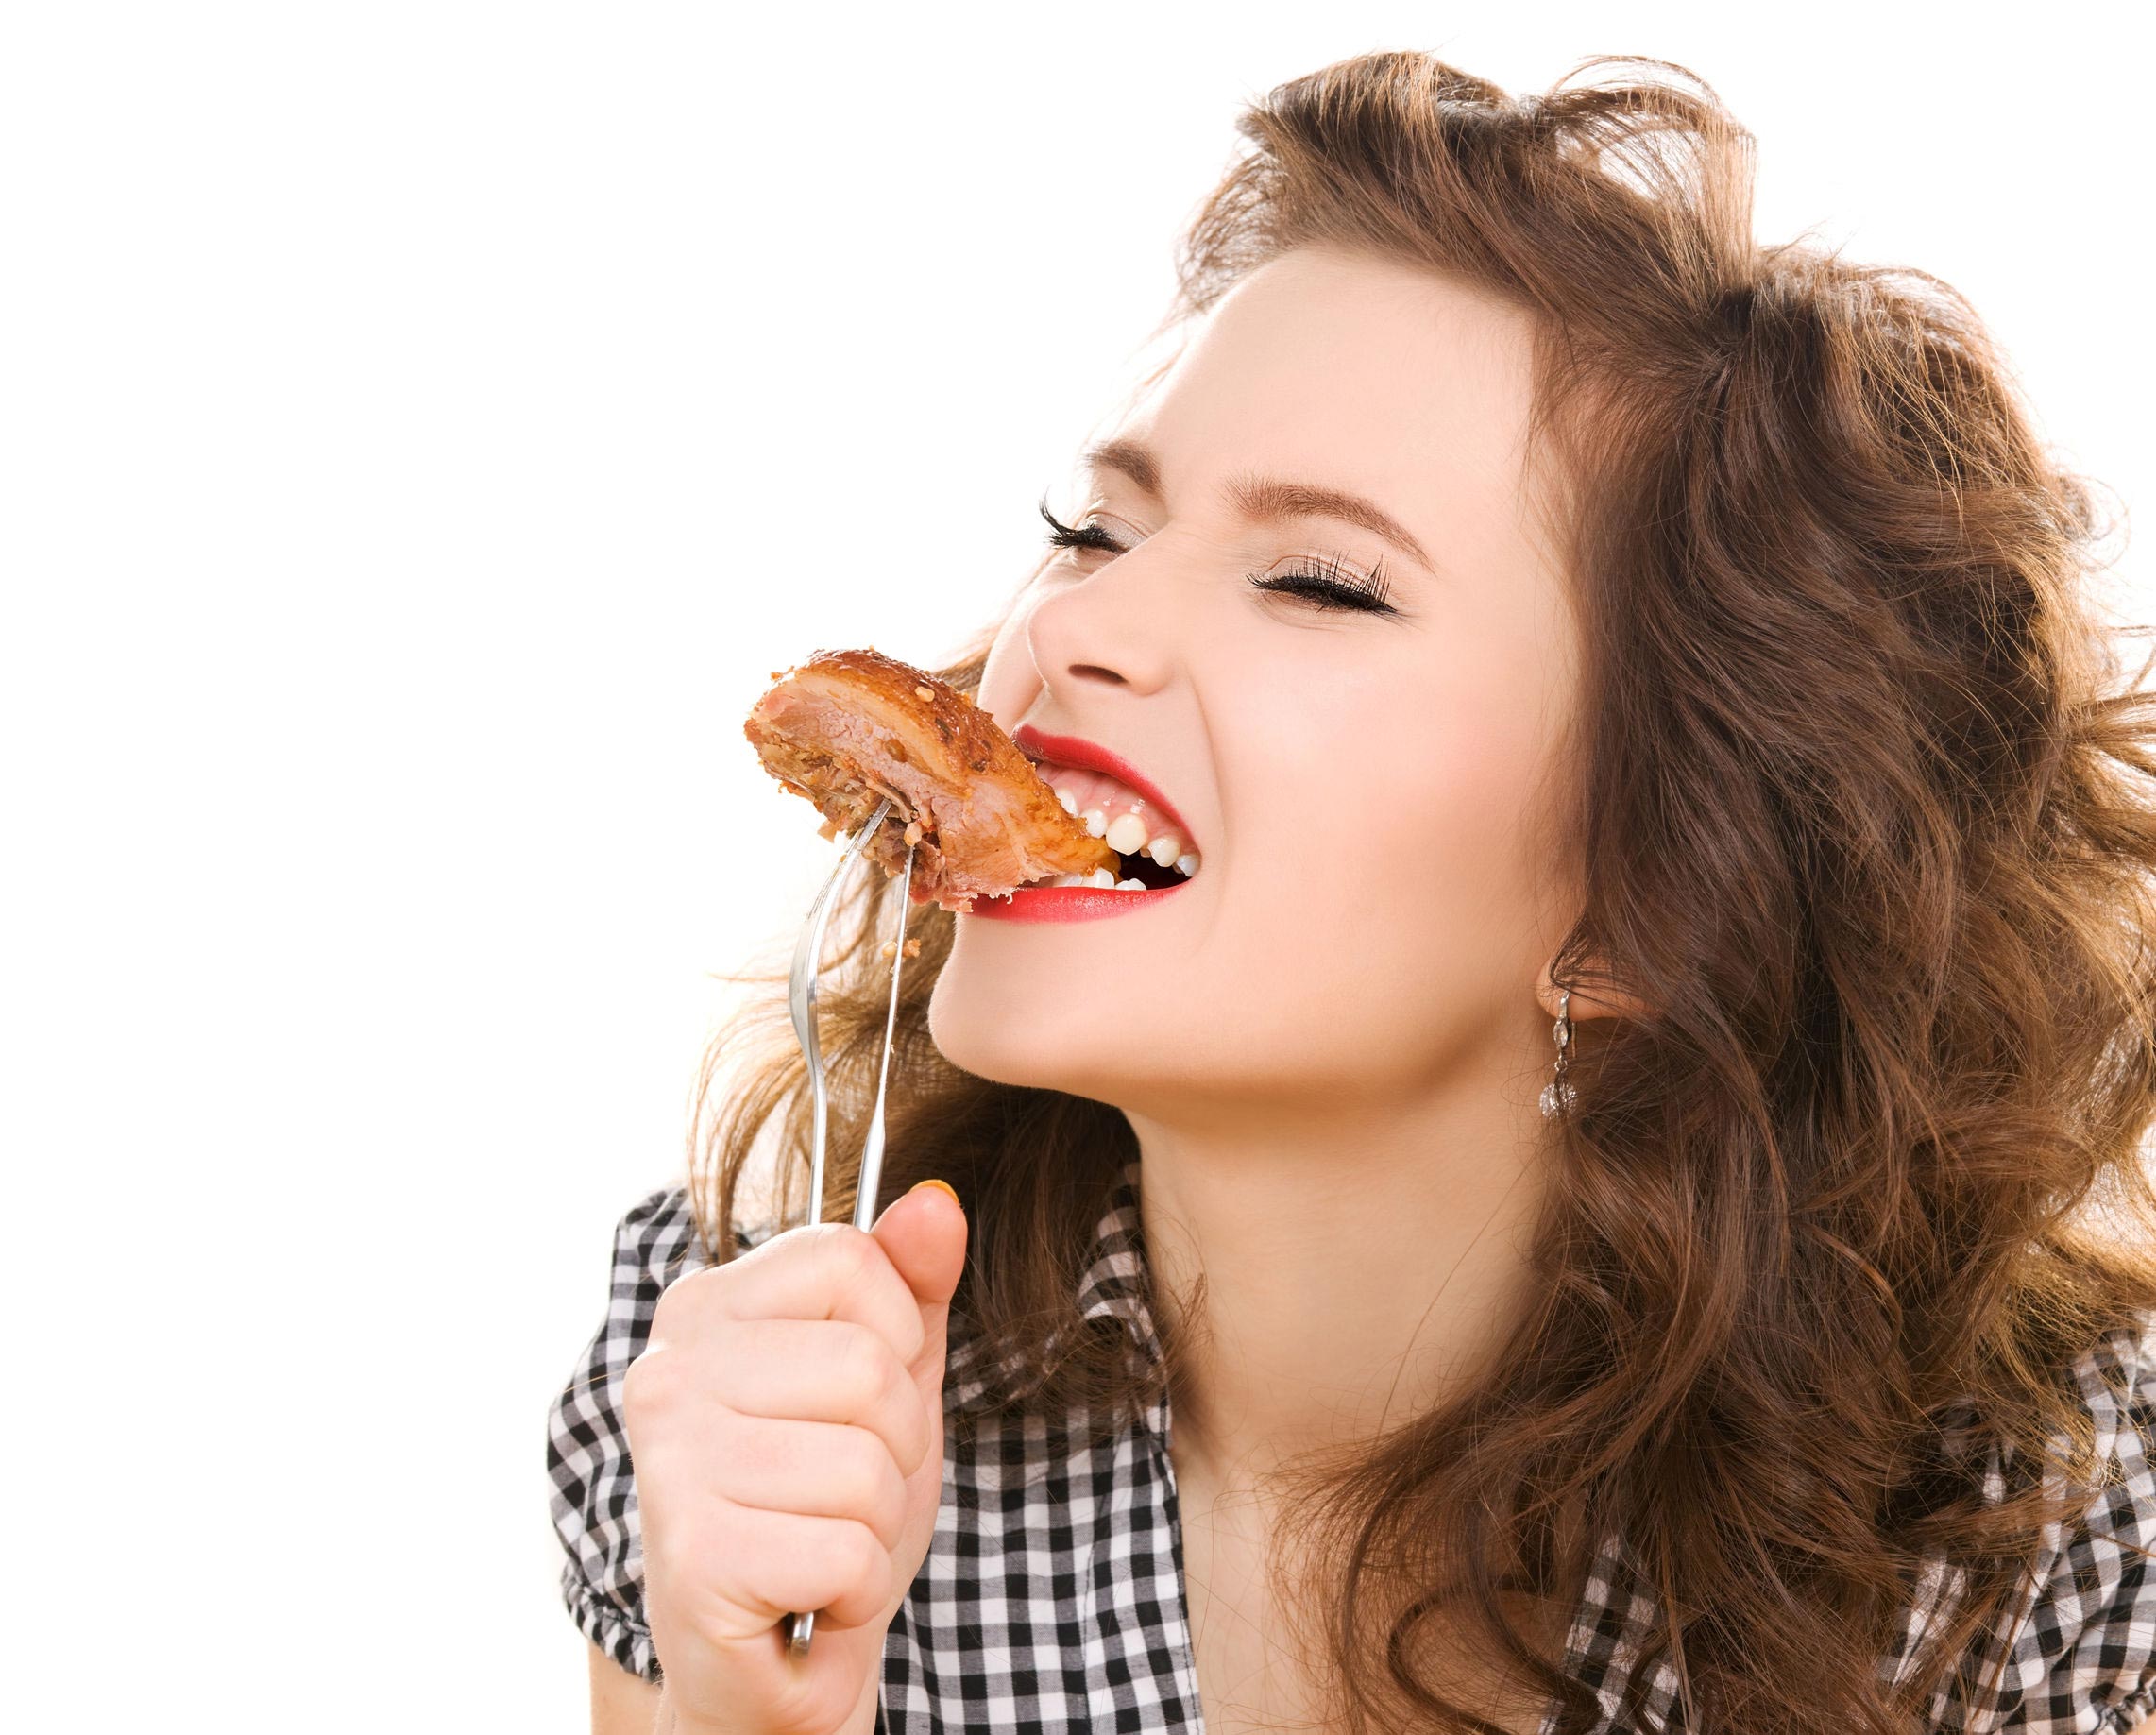 She eats meat. Женщина кушает. Девушка кушает. Девушка ест колбасу.